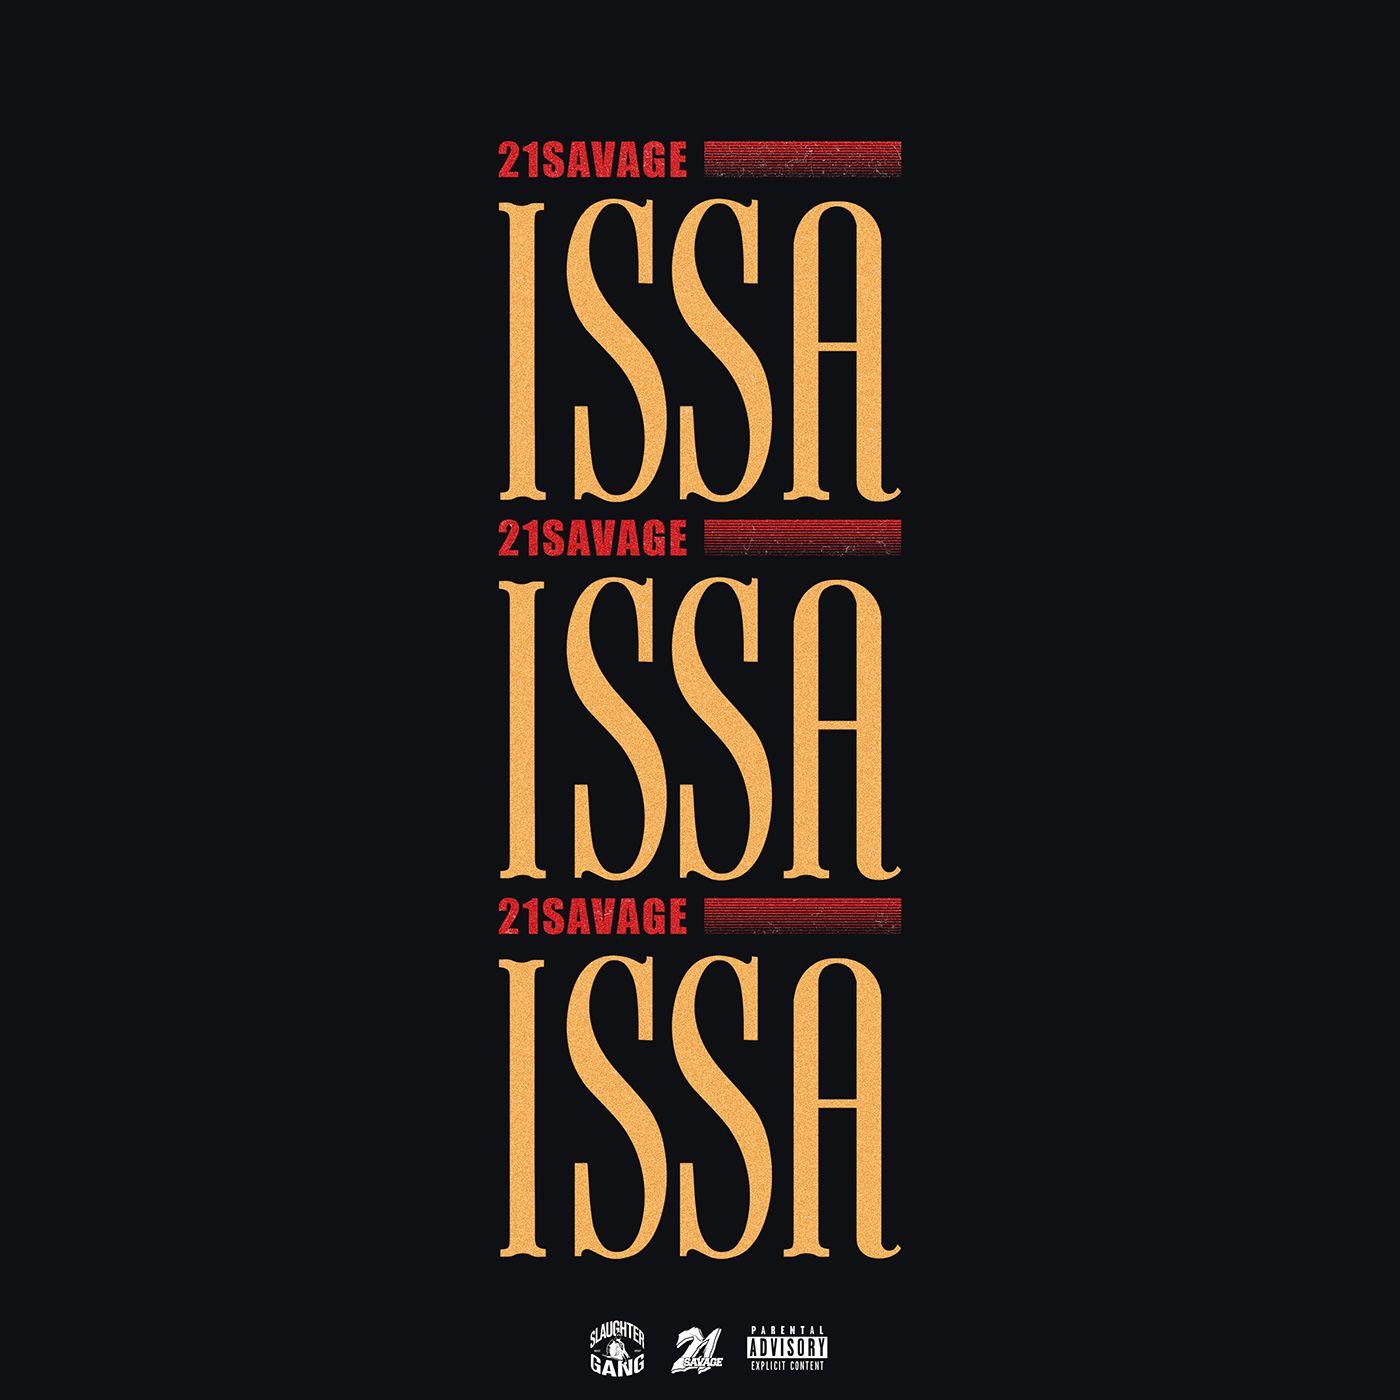 Issa 21 Savage Logo - 21 Savage - ISSA (cover art) on Behance